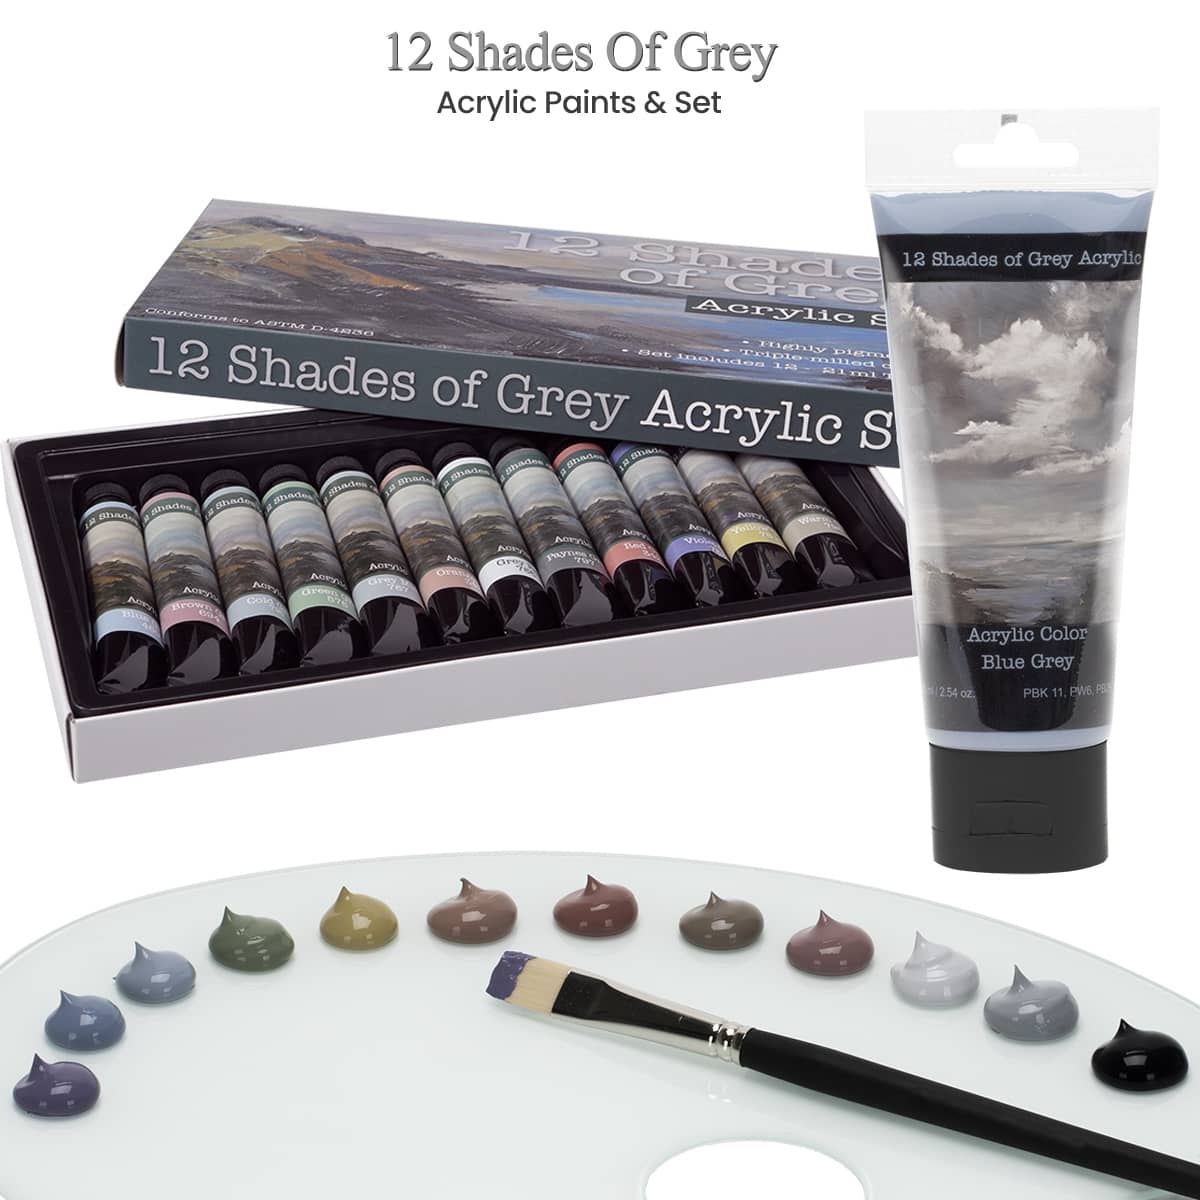 12 Shades of Grey Acrylics